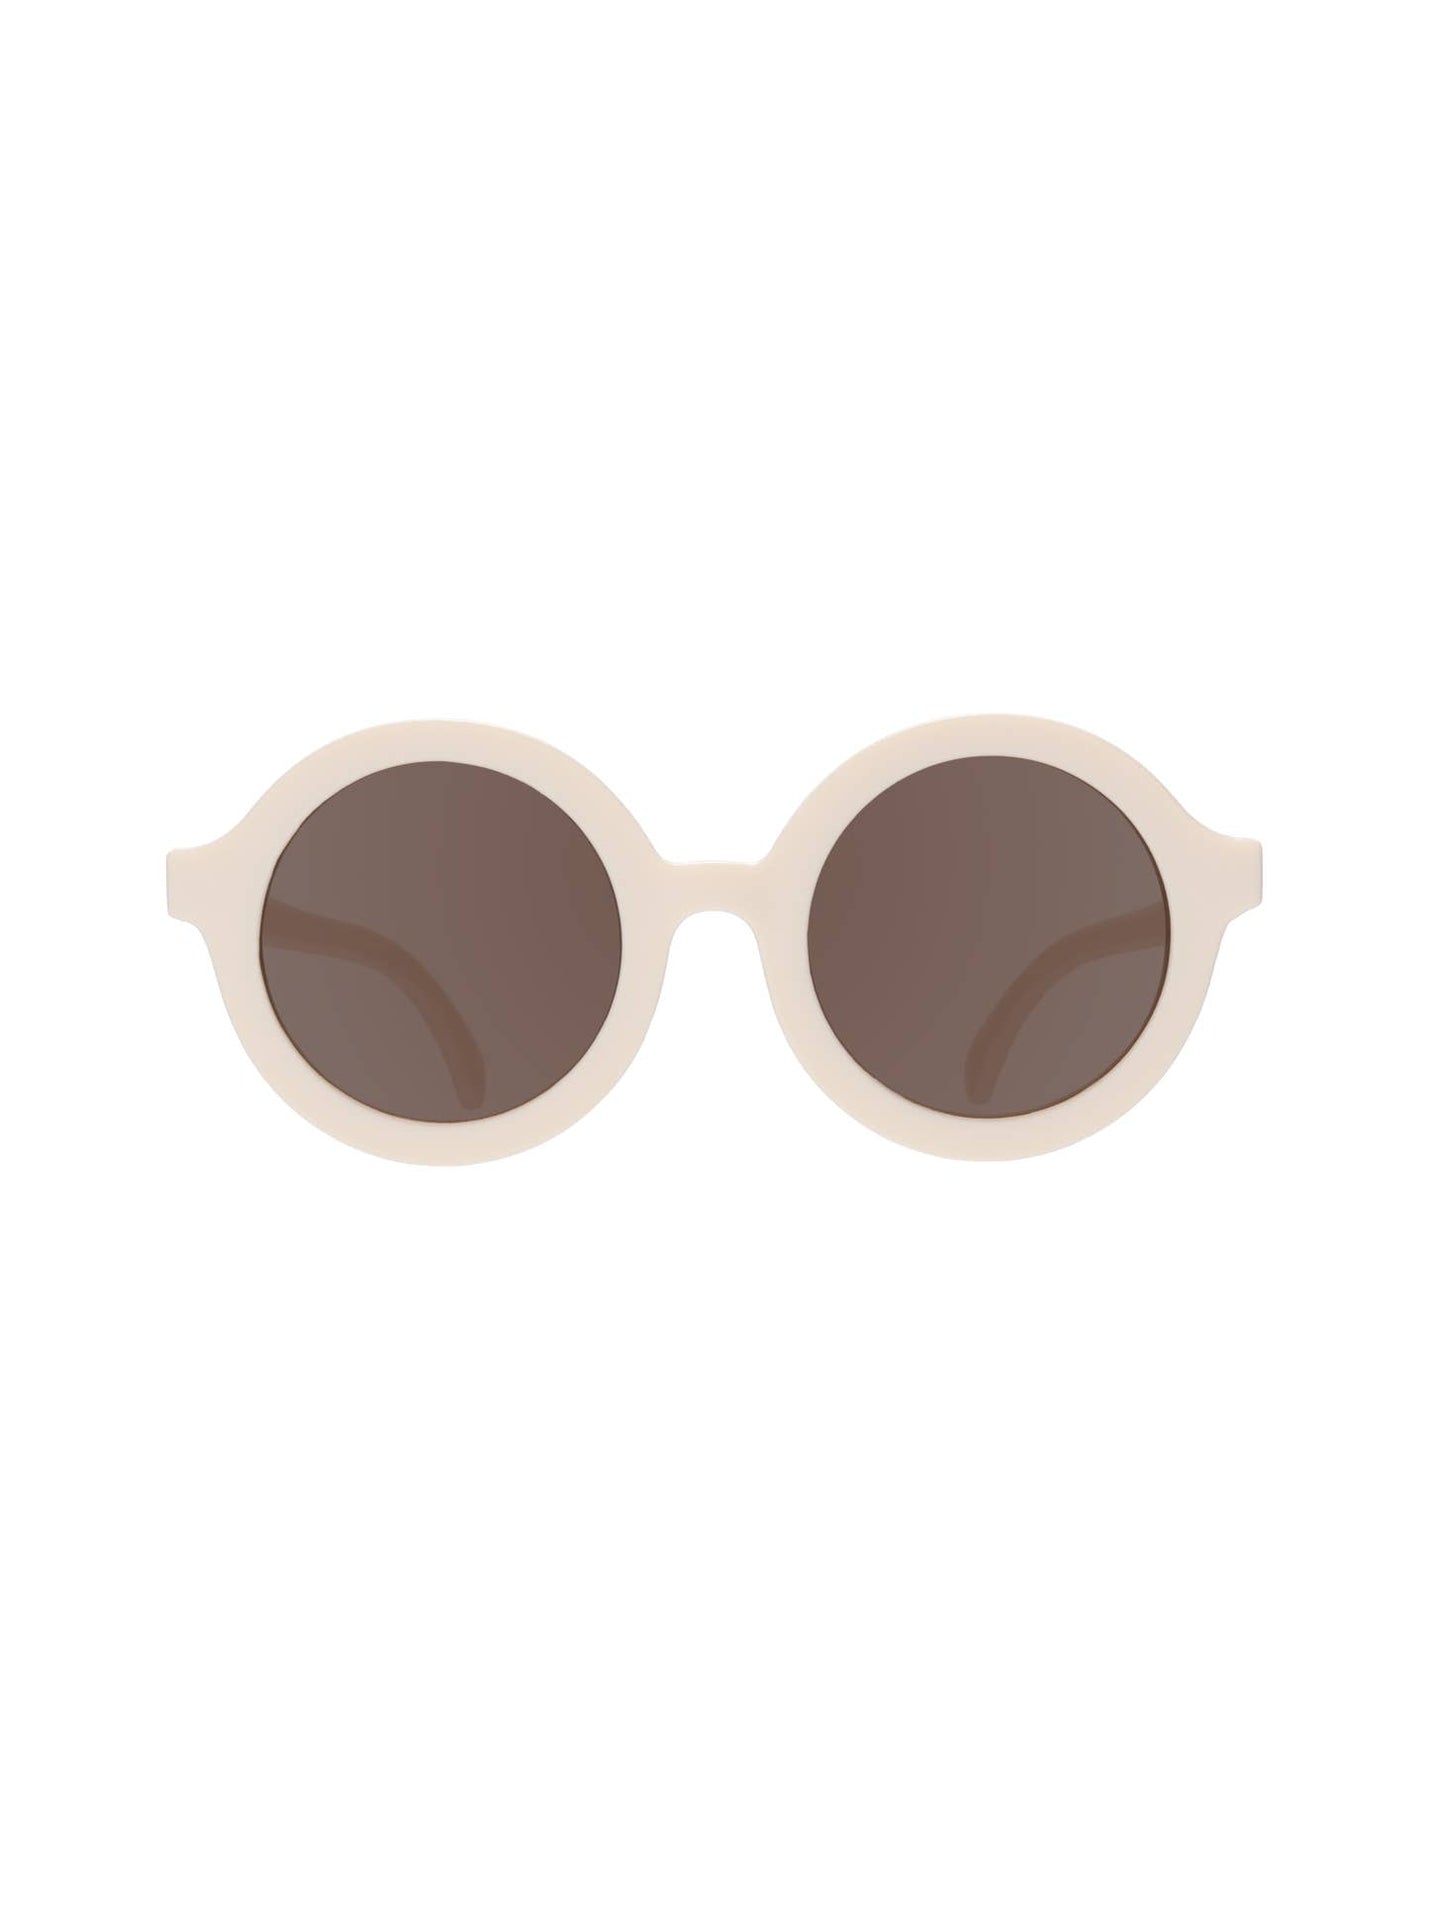 Babiators - Euro Round Sweet Cream Sunglasses with Amber lens